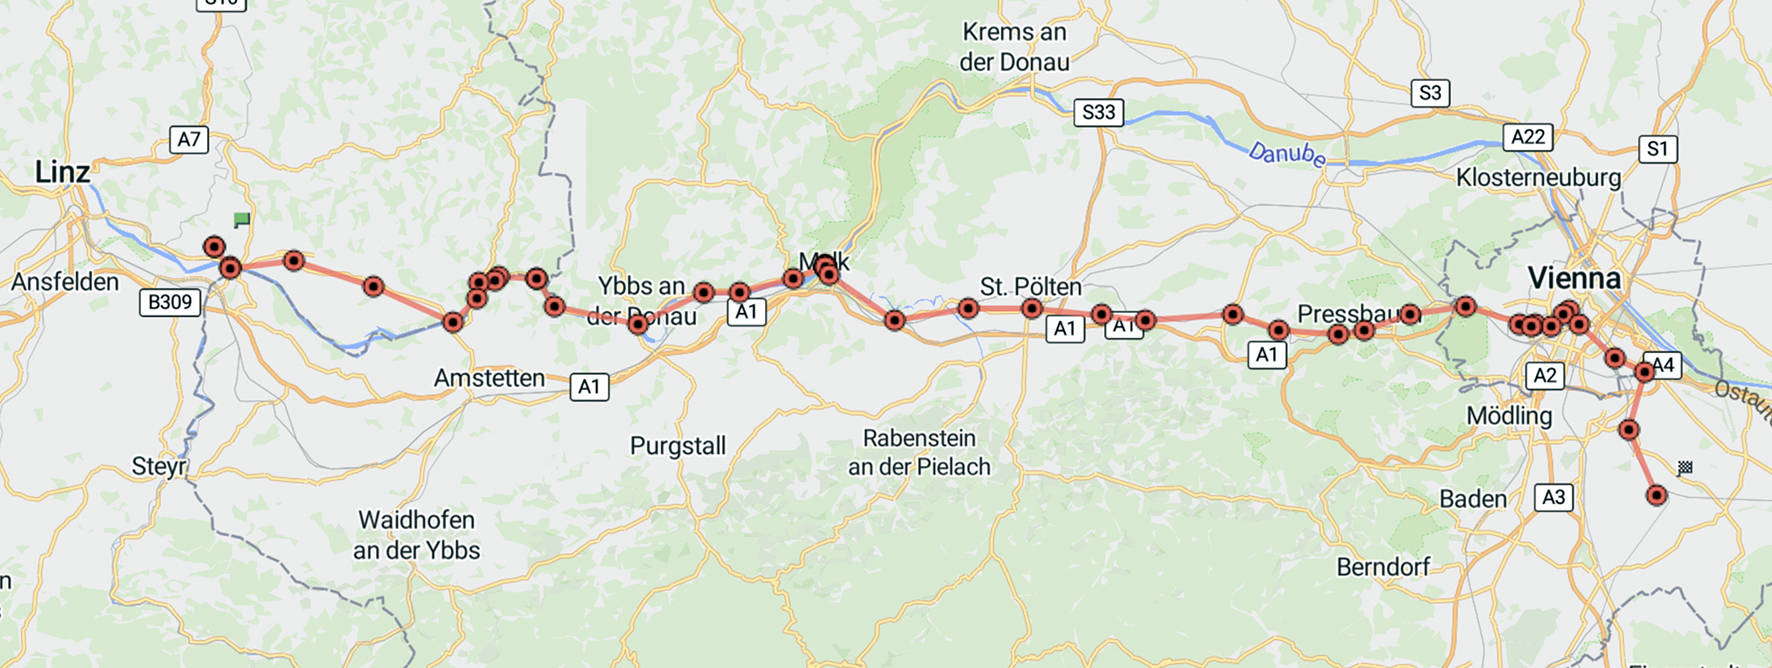 1-20230518-Mauthausen-Gramatneusiedl-200km